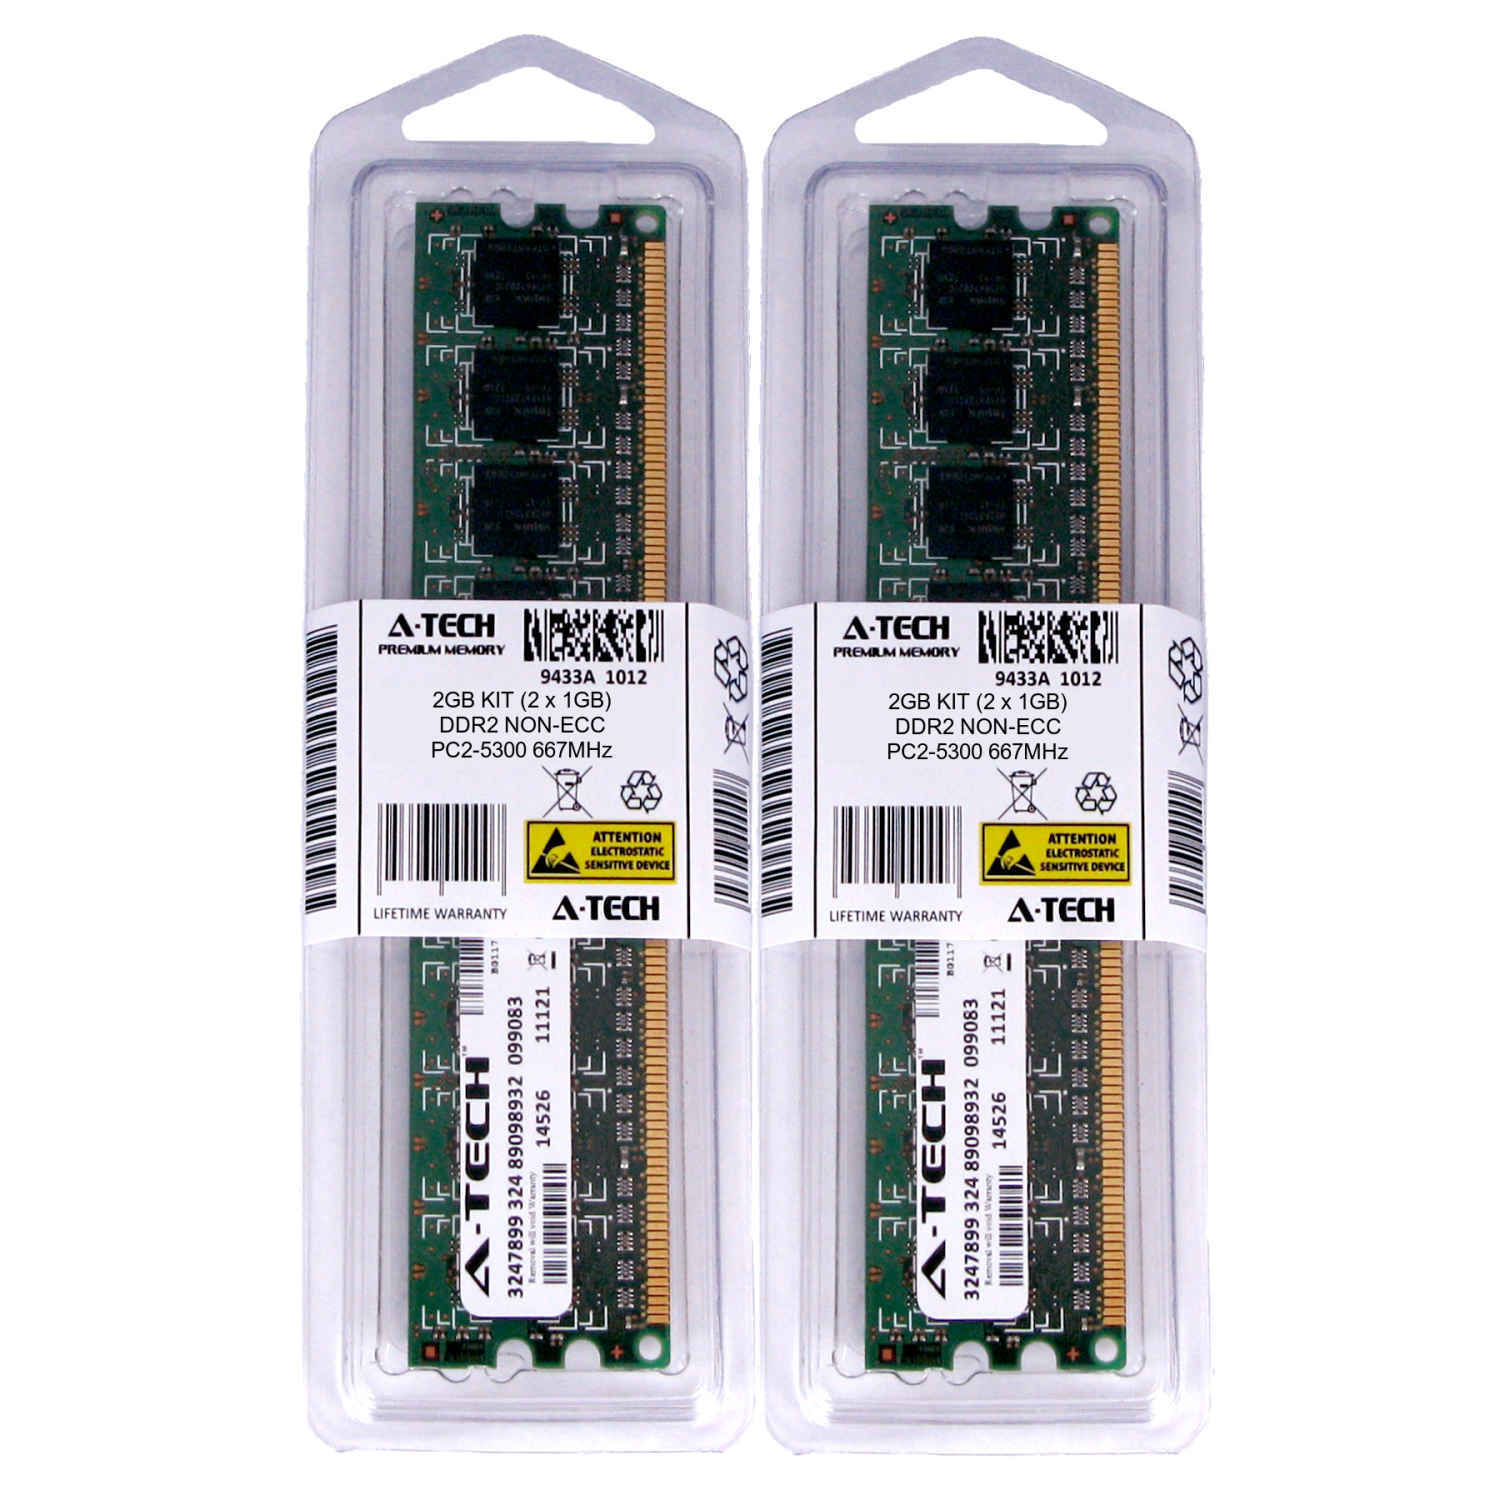 2GB KIT 2 x 1GB DIMM DDR2 NON-ECC PC2-5300 667MHz 667 MHz DDR-2 DDR 2 Ram Memory